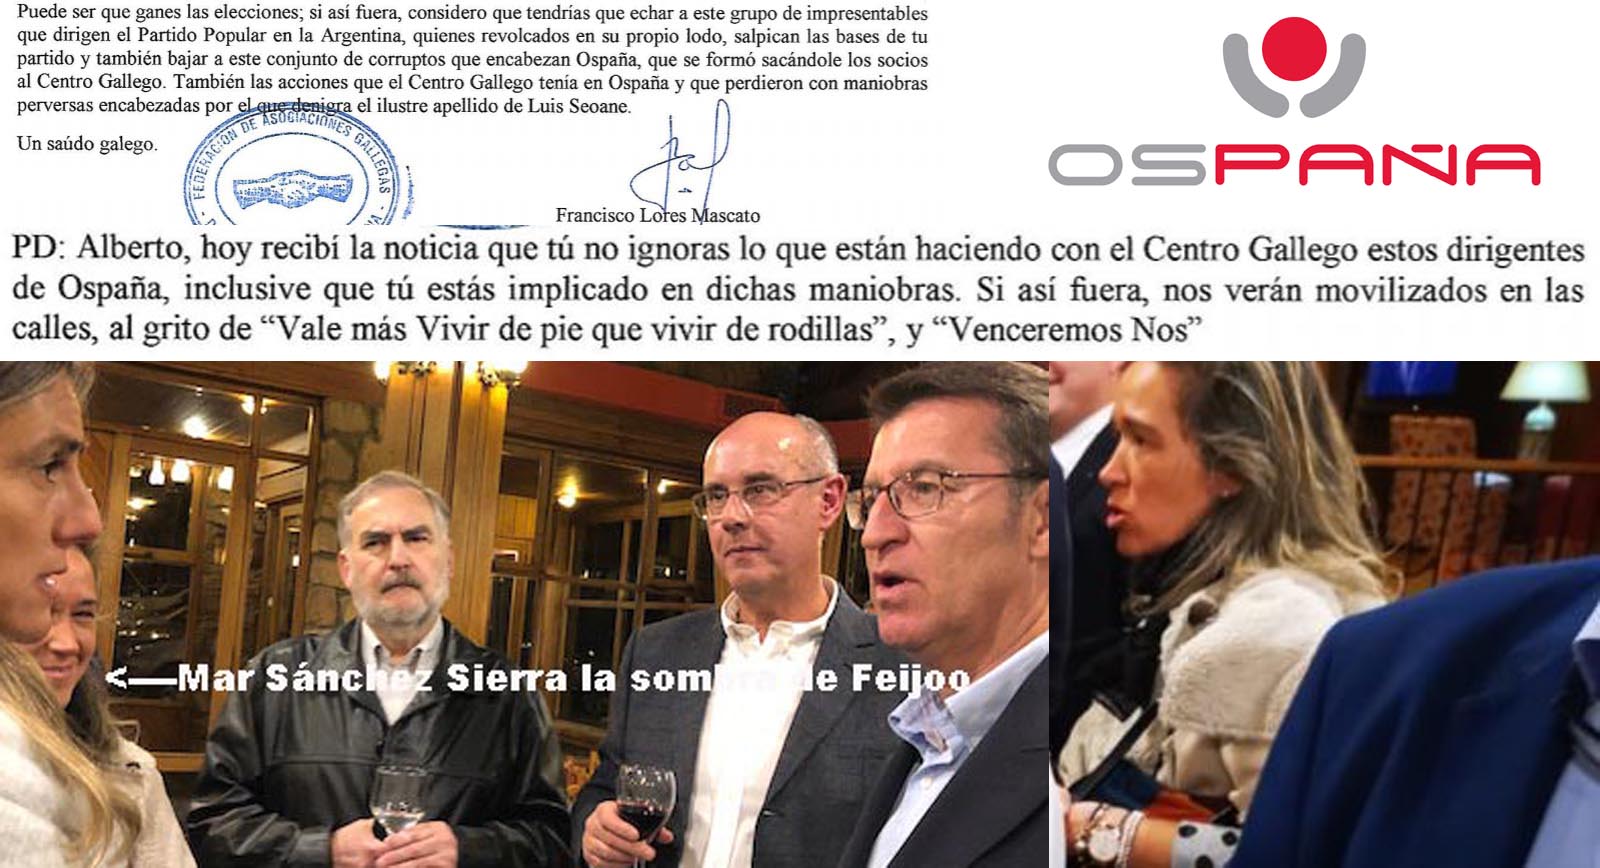 XornaldeGalicia on Twitter: "Feijóo y Mar Sánchez a Uruguay tras lograrles Alfonso  Rueda IMPUNIDAD @cayetanaAT @FeijooGalicia @_MartaGonzalez_  #secretariademedios @pp @ppdeg #ppdegalicia @xunta #xunta #retegal #amtega  @populares <a href=